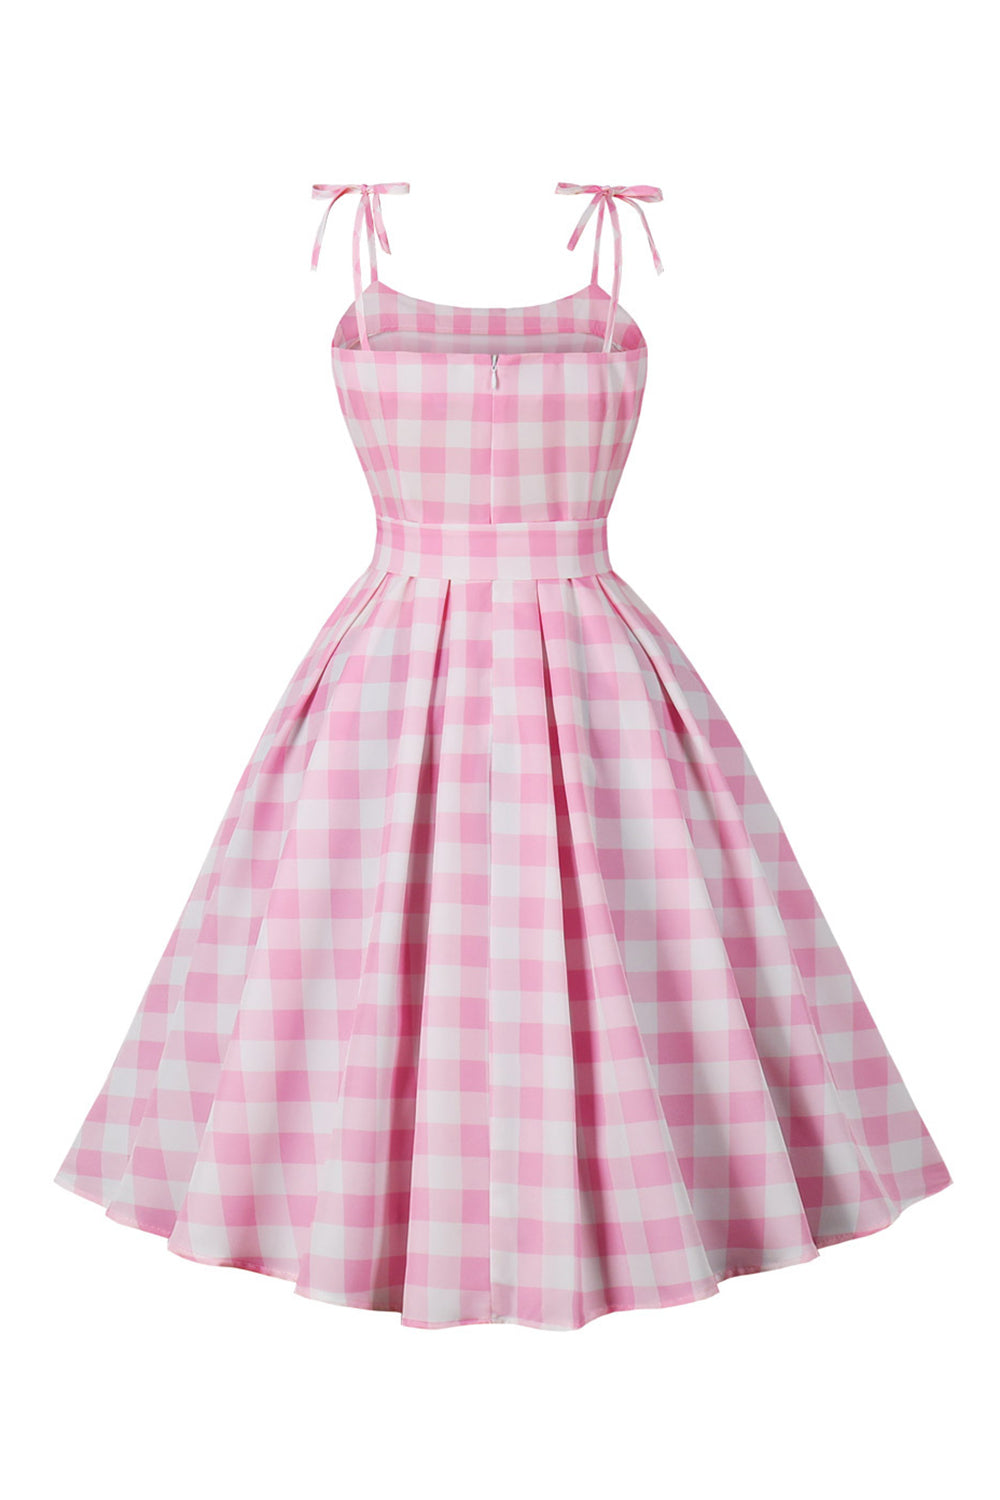 Pink Plaid Pin Up Vintage 1950s Dress